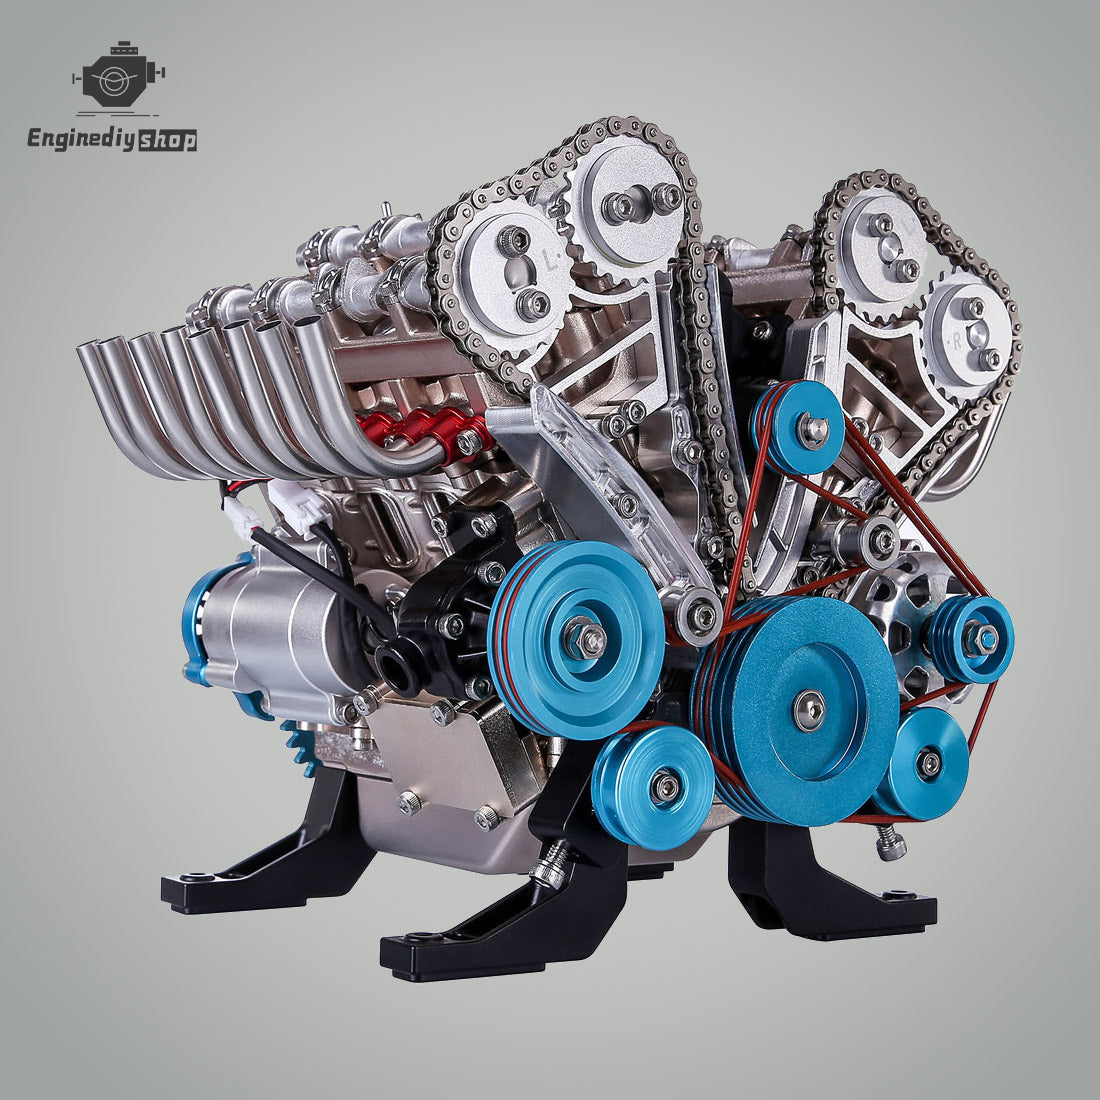 METAL ENGINES——Enginediyshop